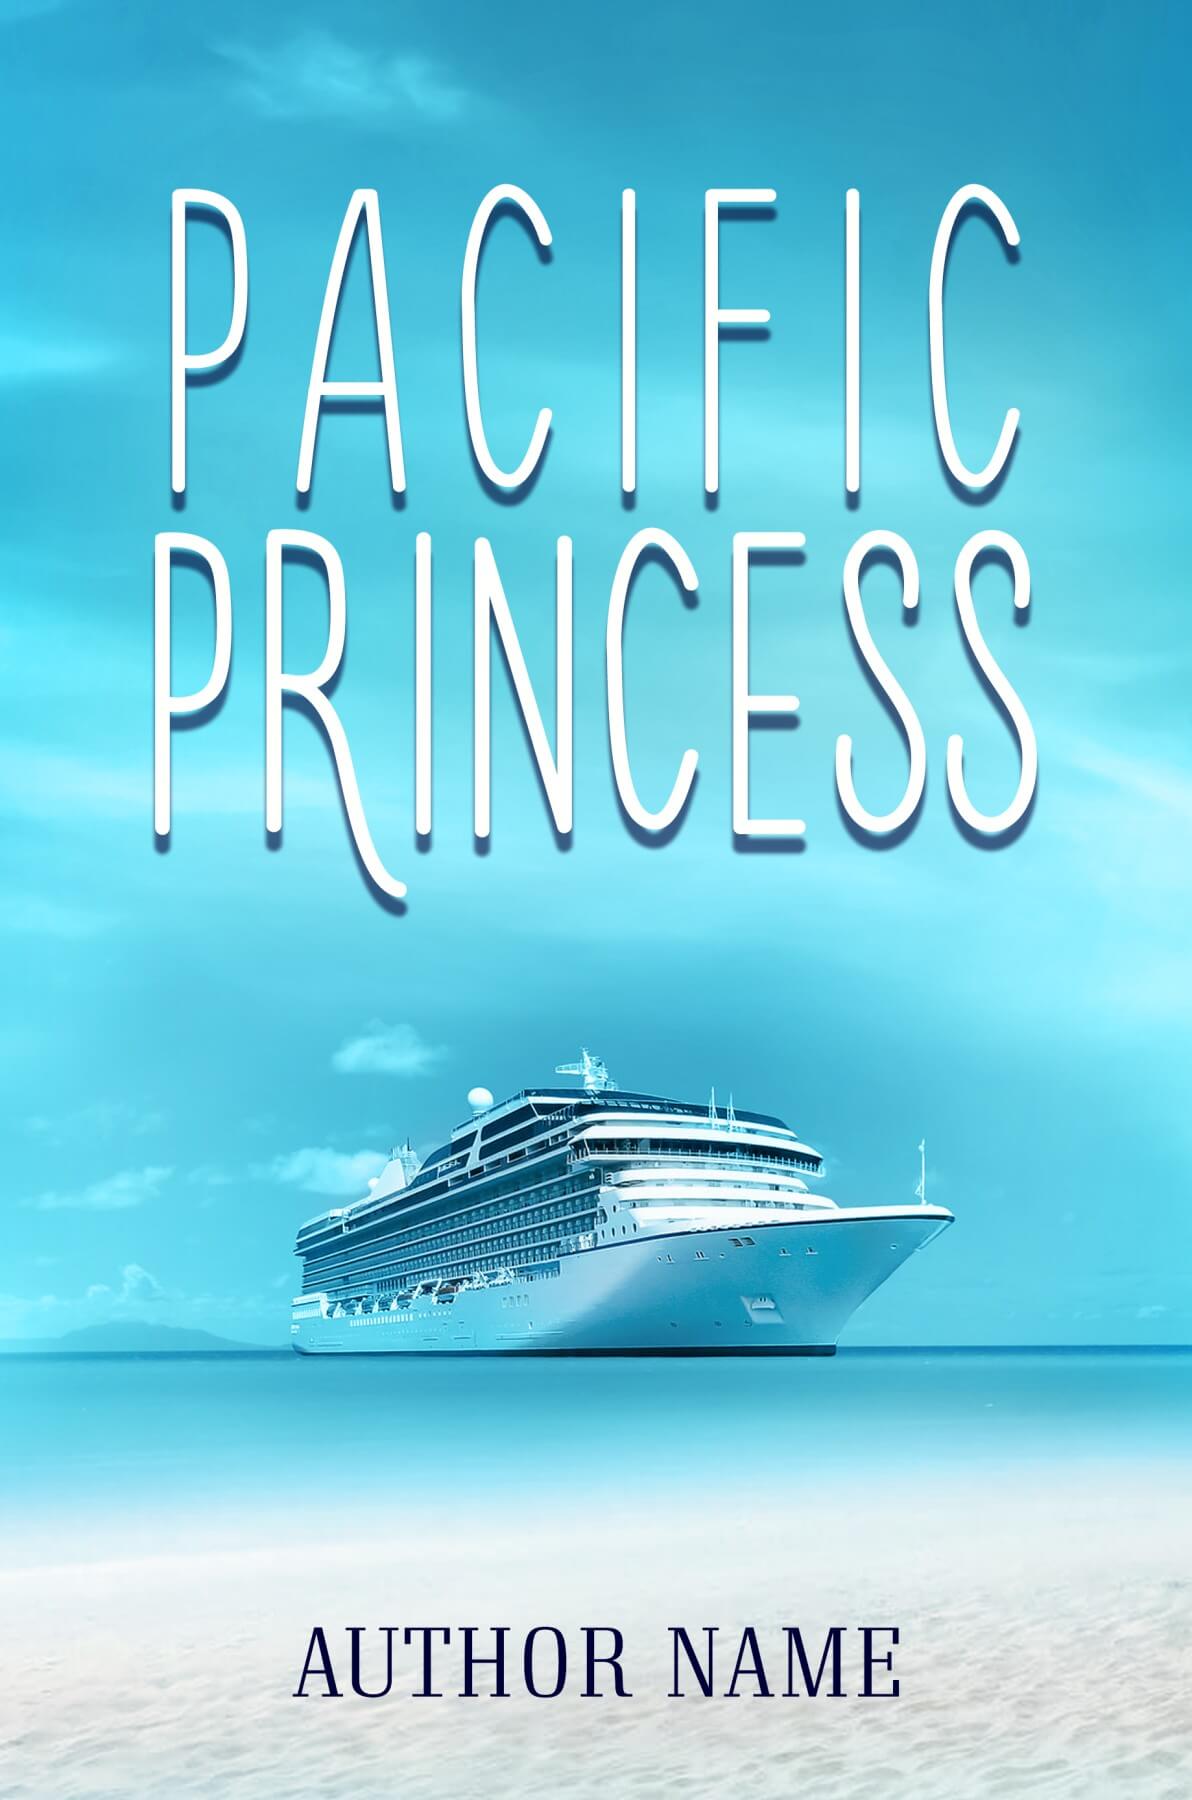 Pacific Princess The Book Cover Designer